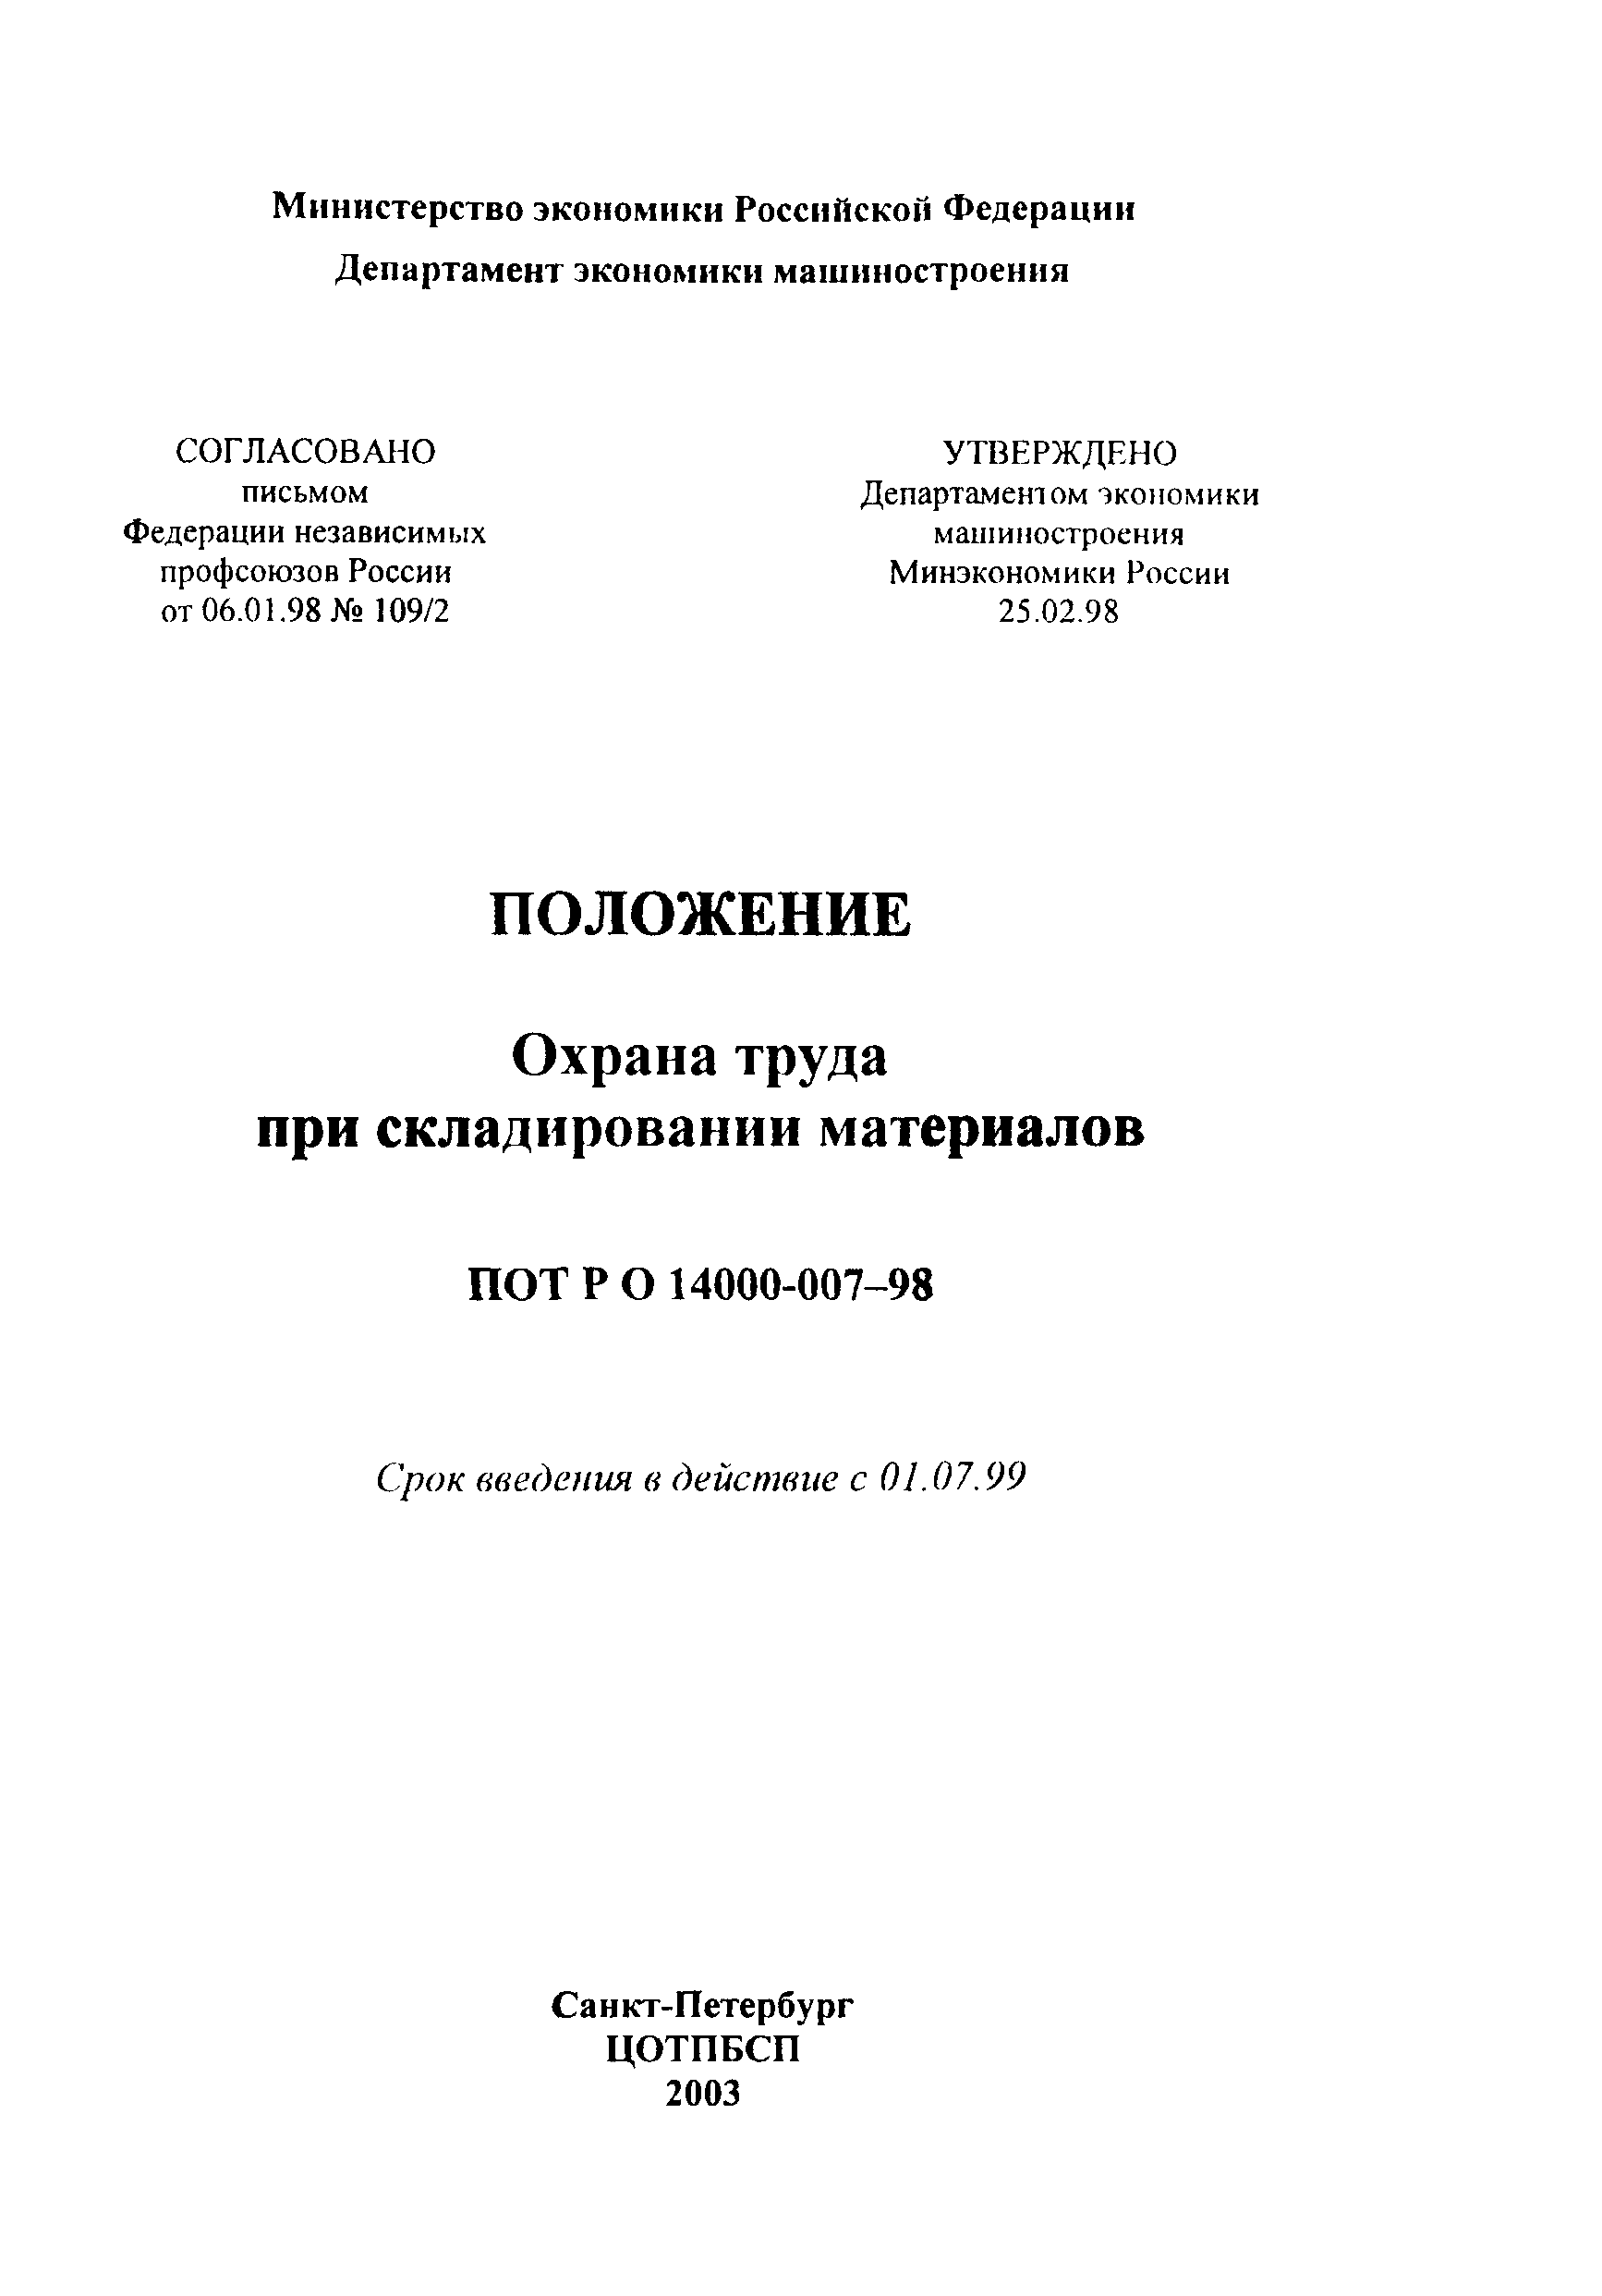 ПОТ Р О-14000-007-98